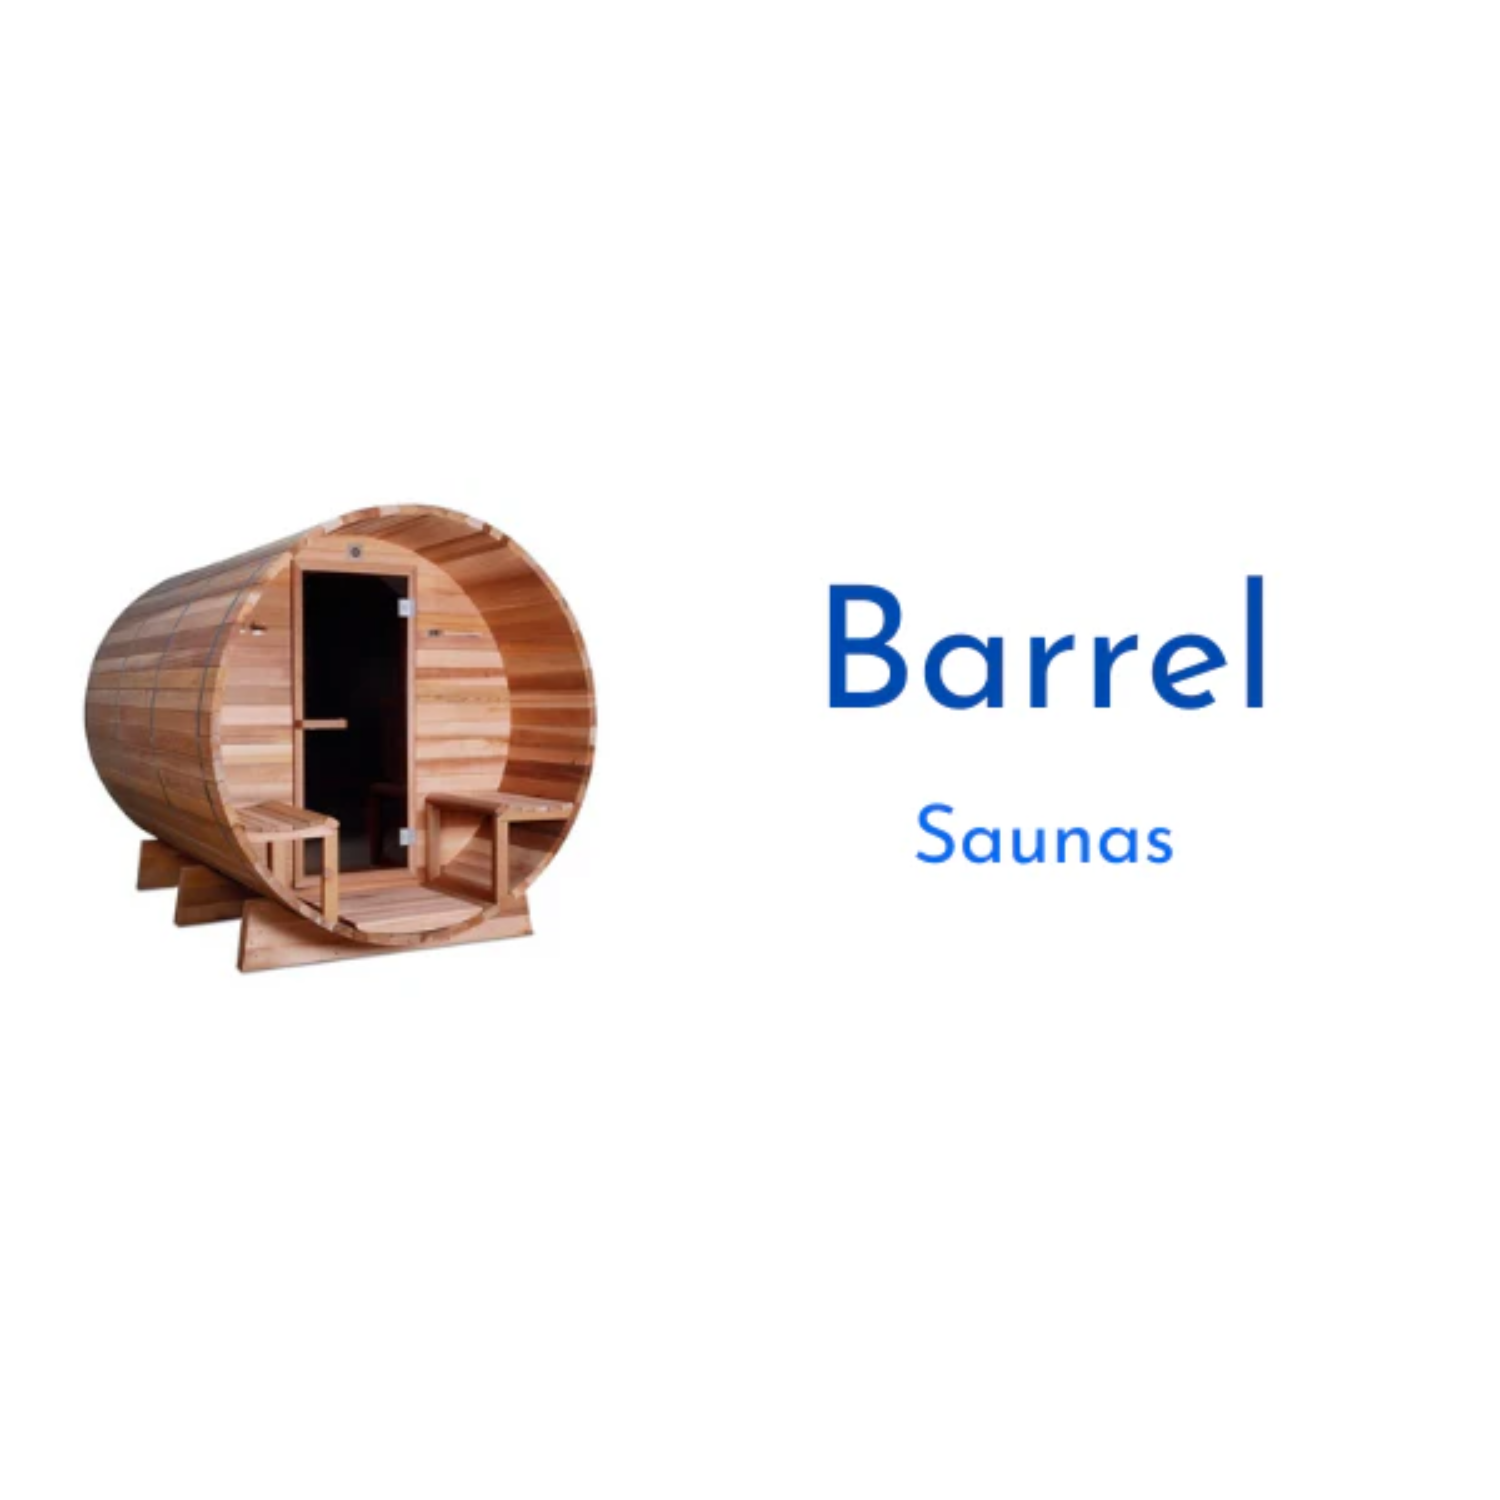 Barrel Saunas